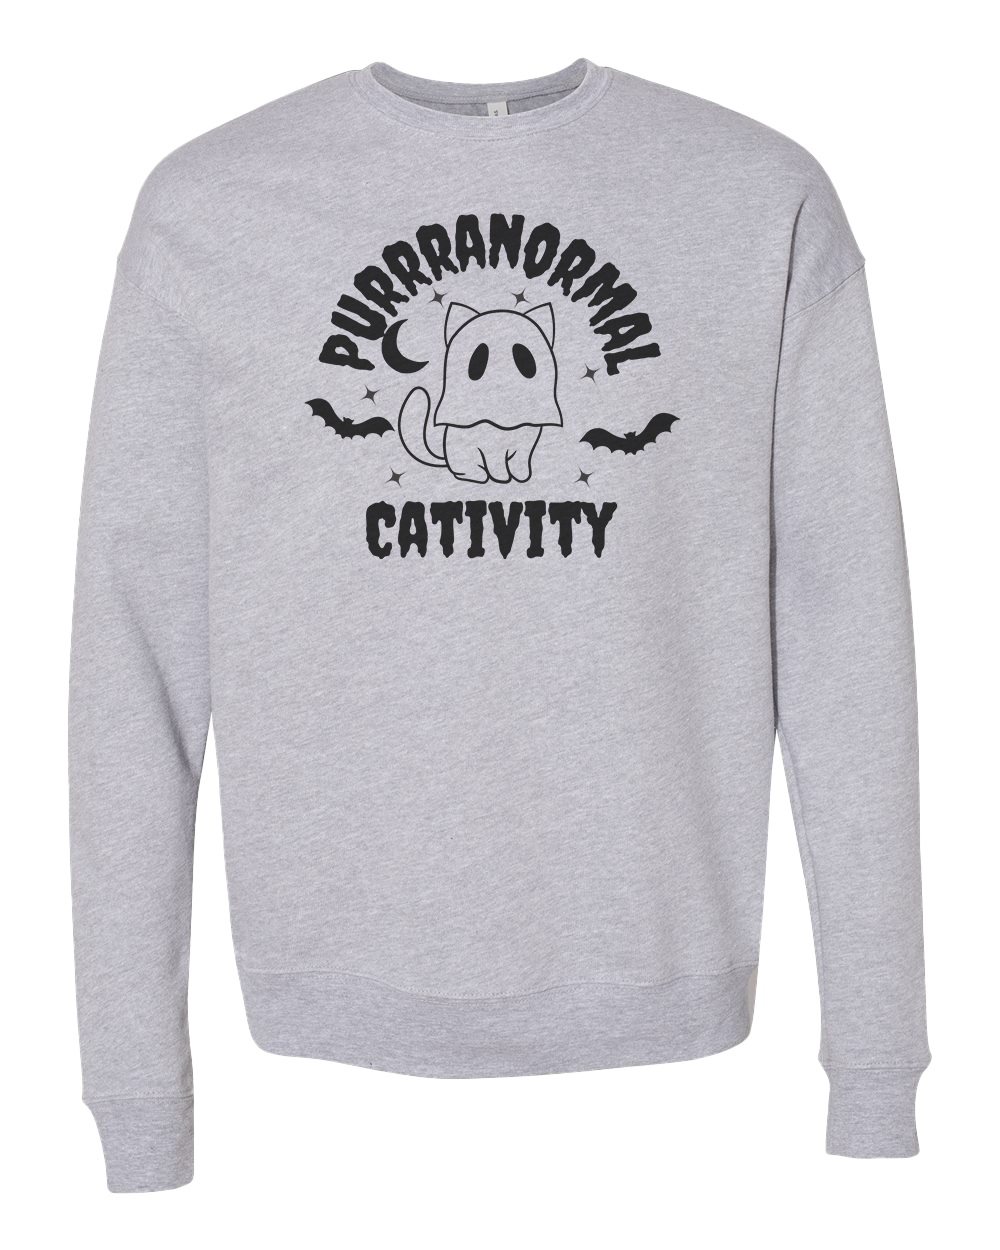 Purranormal Cativity Crew Sweatshirt - Athletic Heather